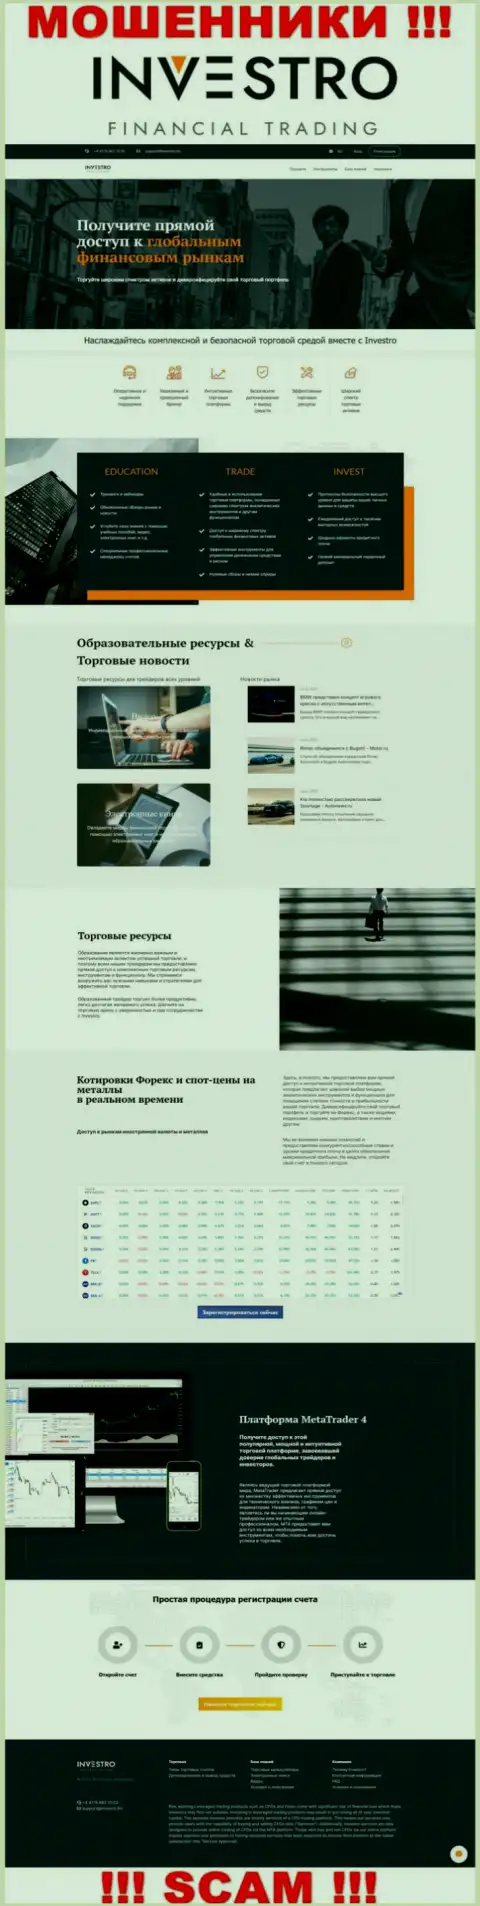 Скриншот официального ресурса Инвестро Фм - Investro Fm